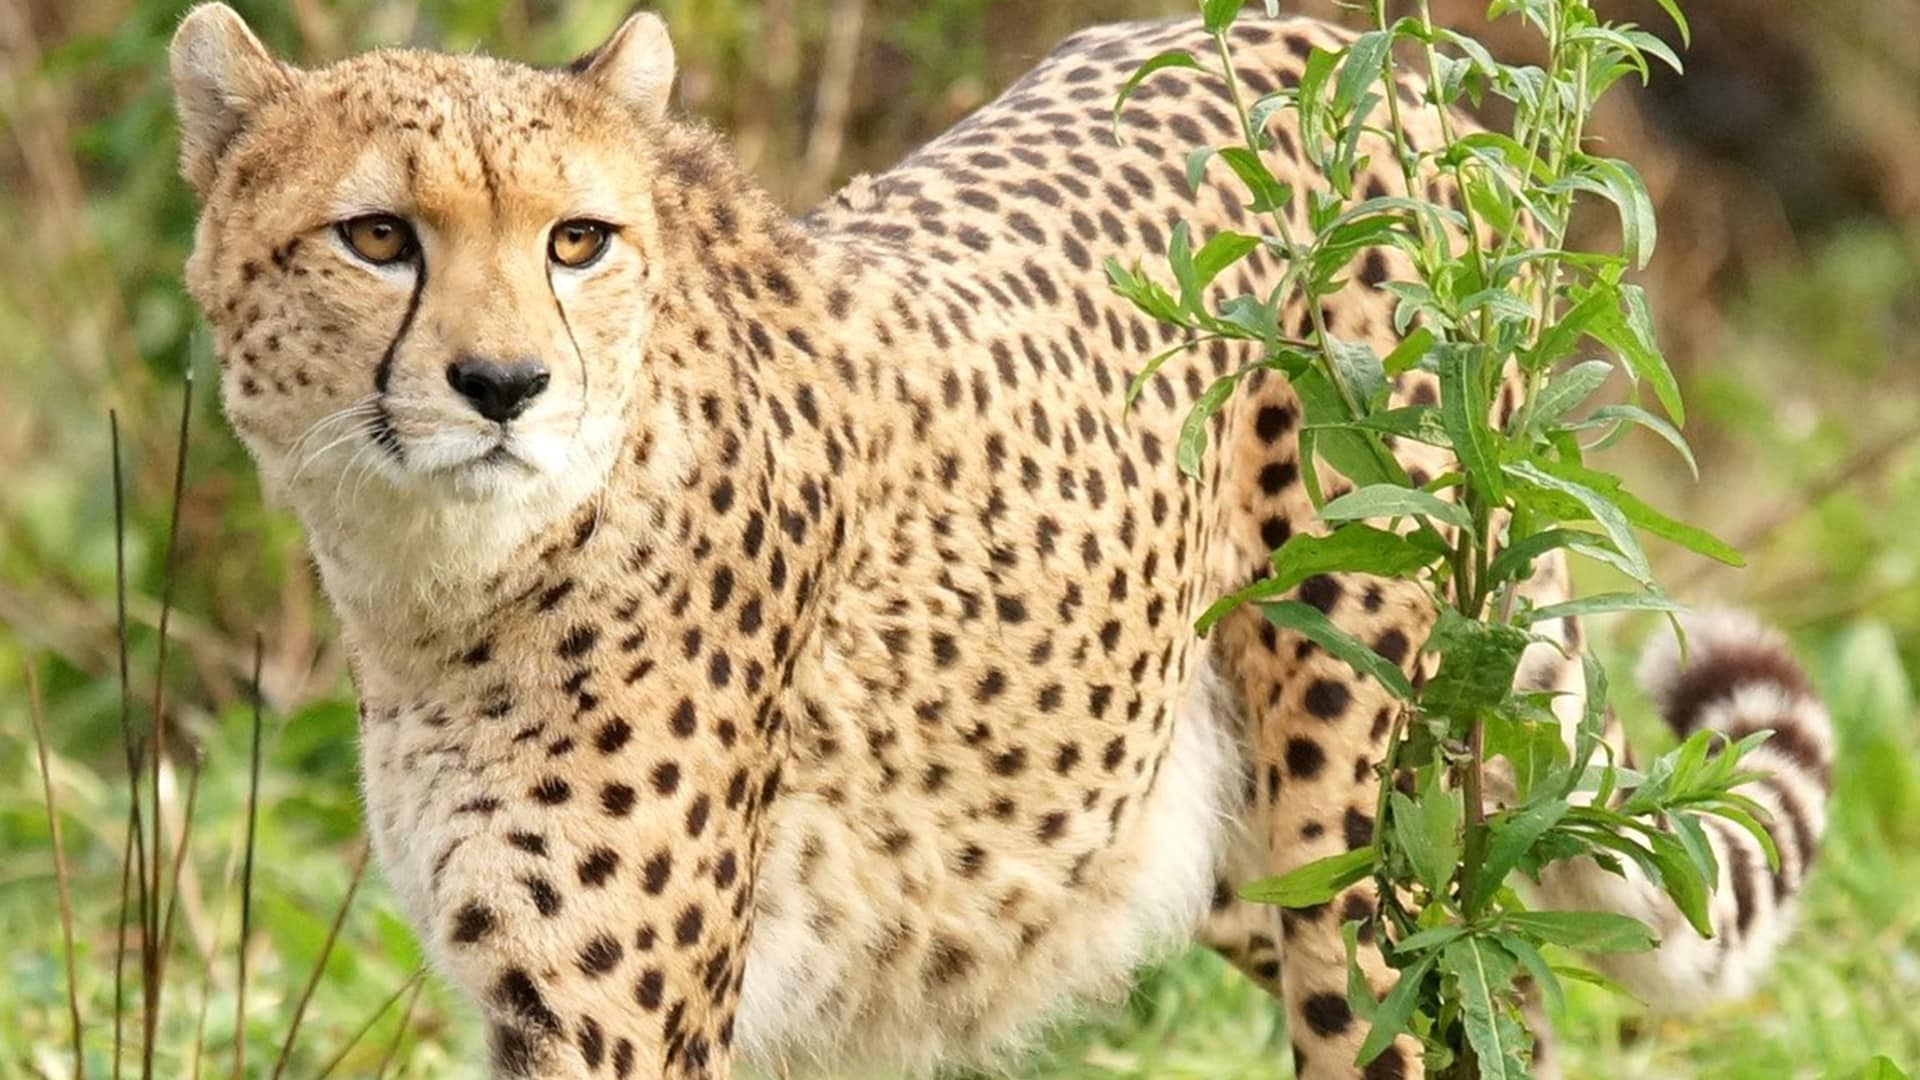 Cheetah Conservation